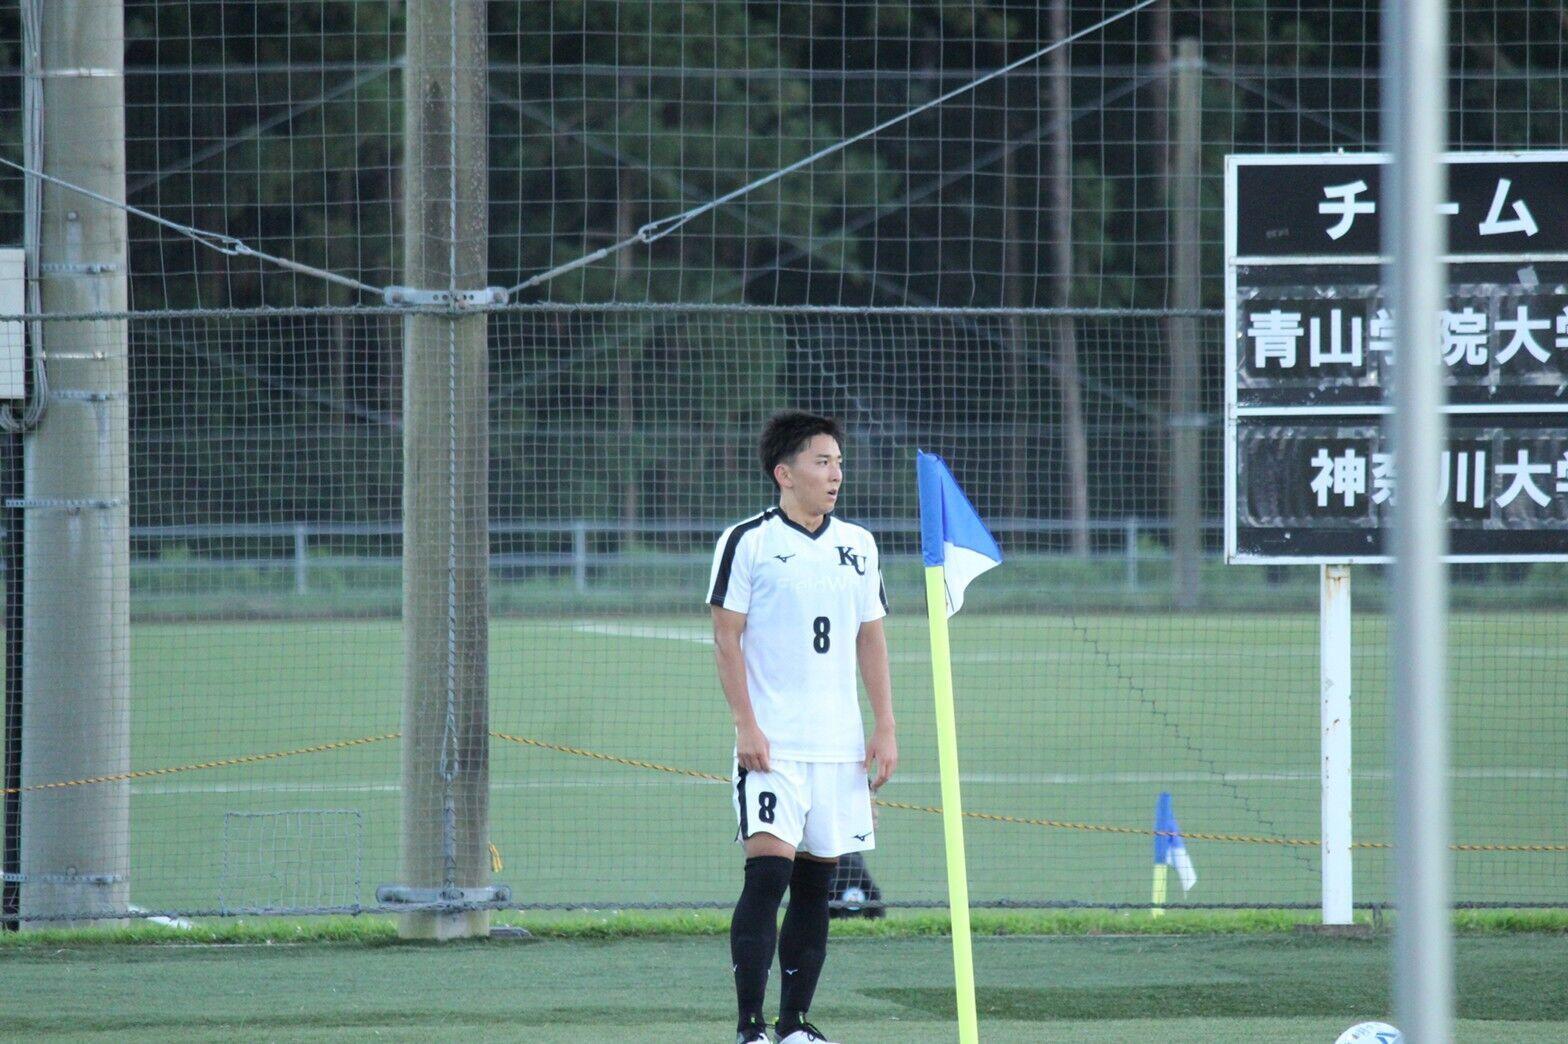 https://football.ku-sports.jp/blog/photoreport/images/20200901170207.jpg